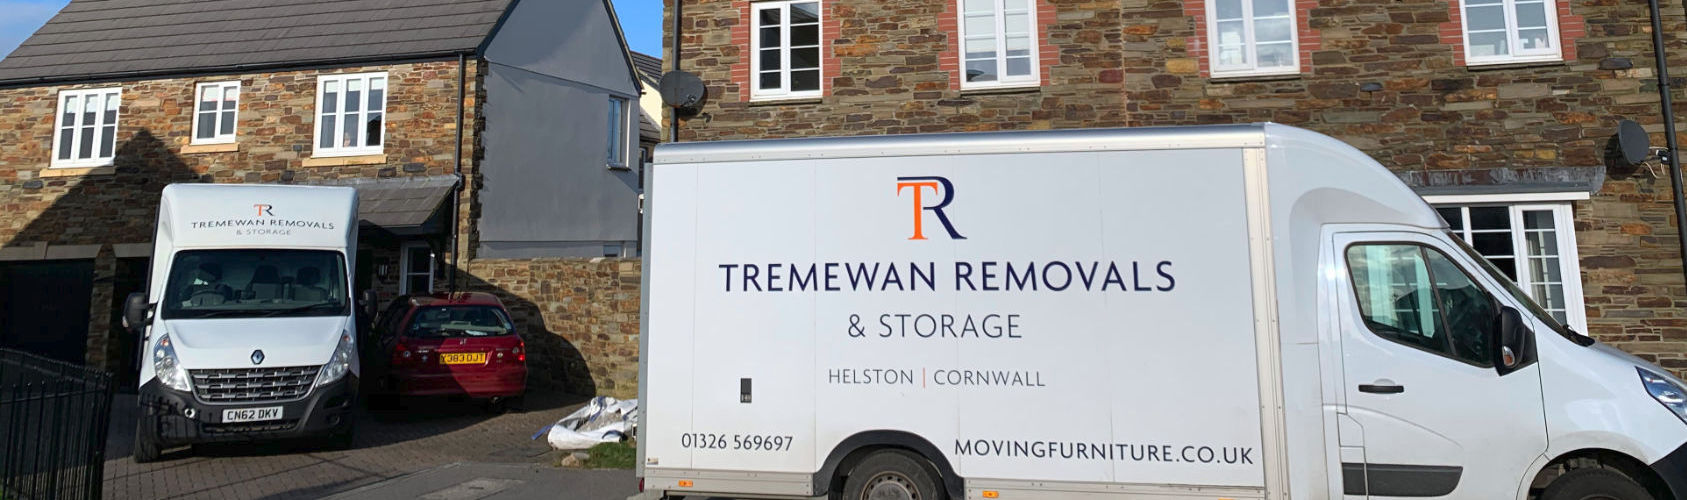 Tremewan Removals & Storage. Helston, Cornwall.